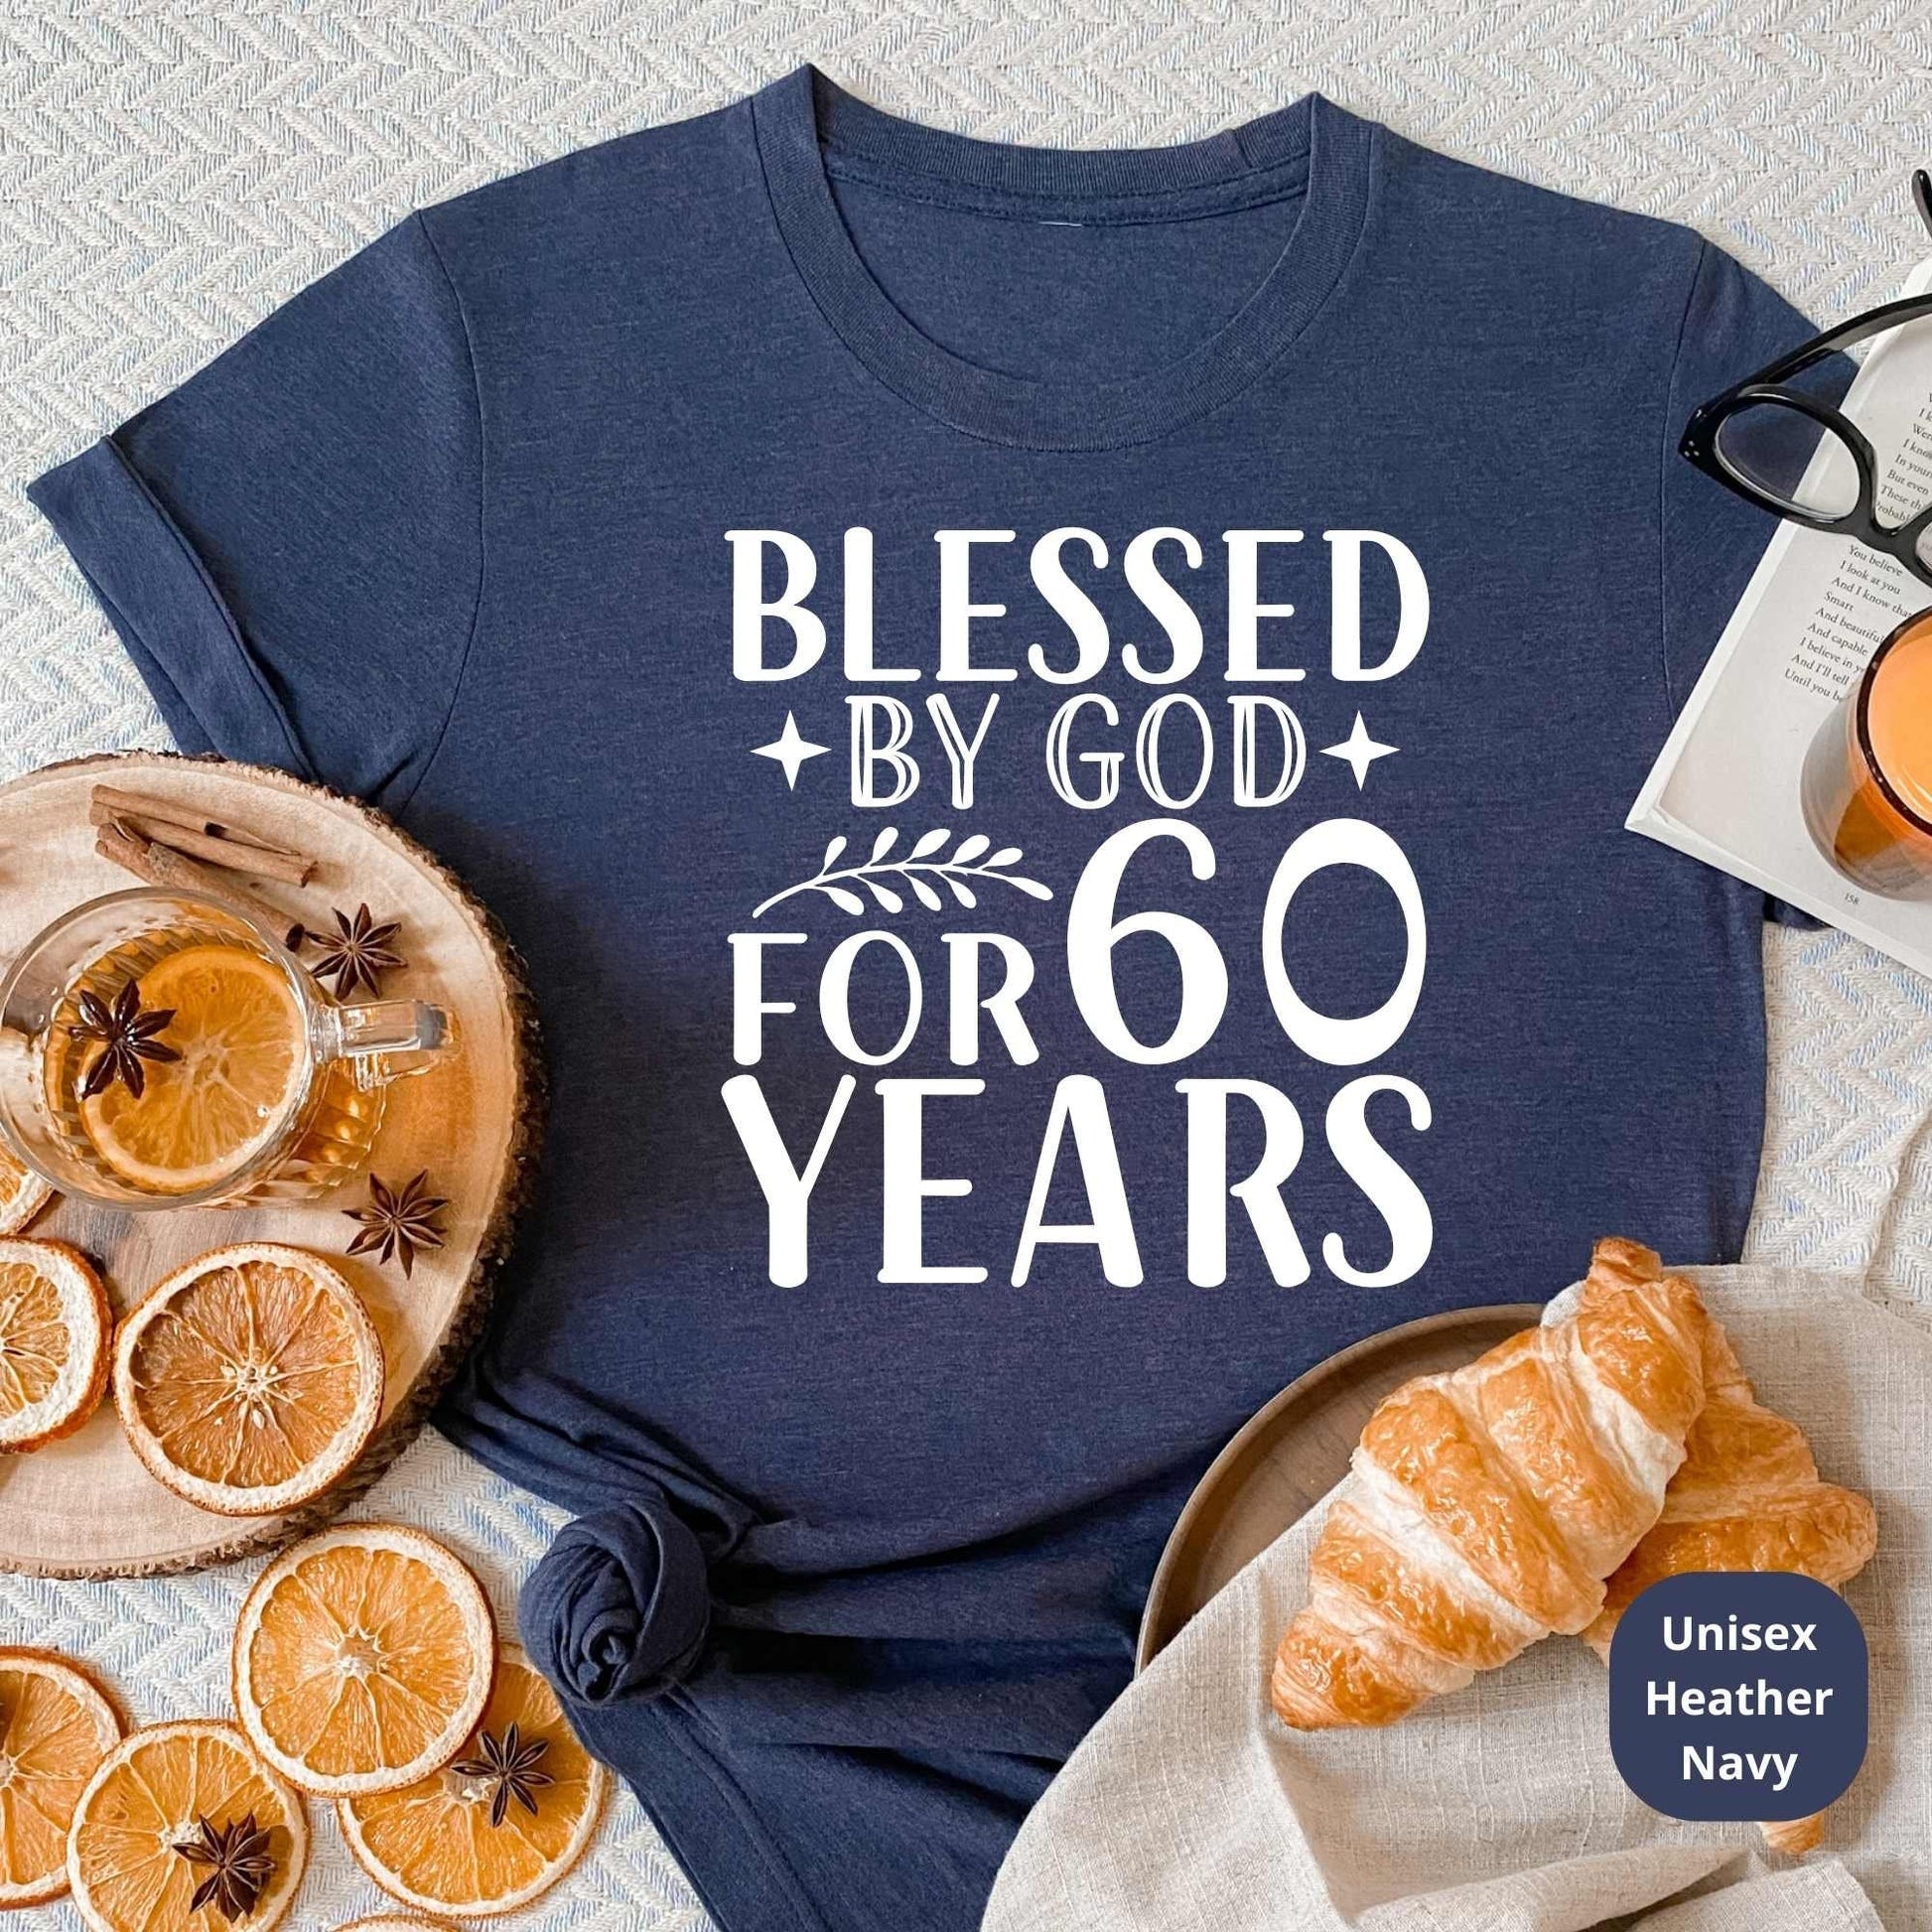 60th Birthday Shirt, 60th Birthday Gifts, Bless by God 60 Years HMDesignStudioUS